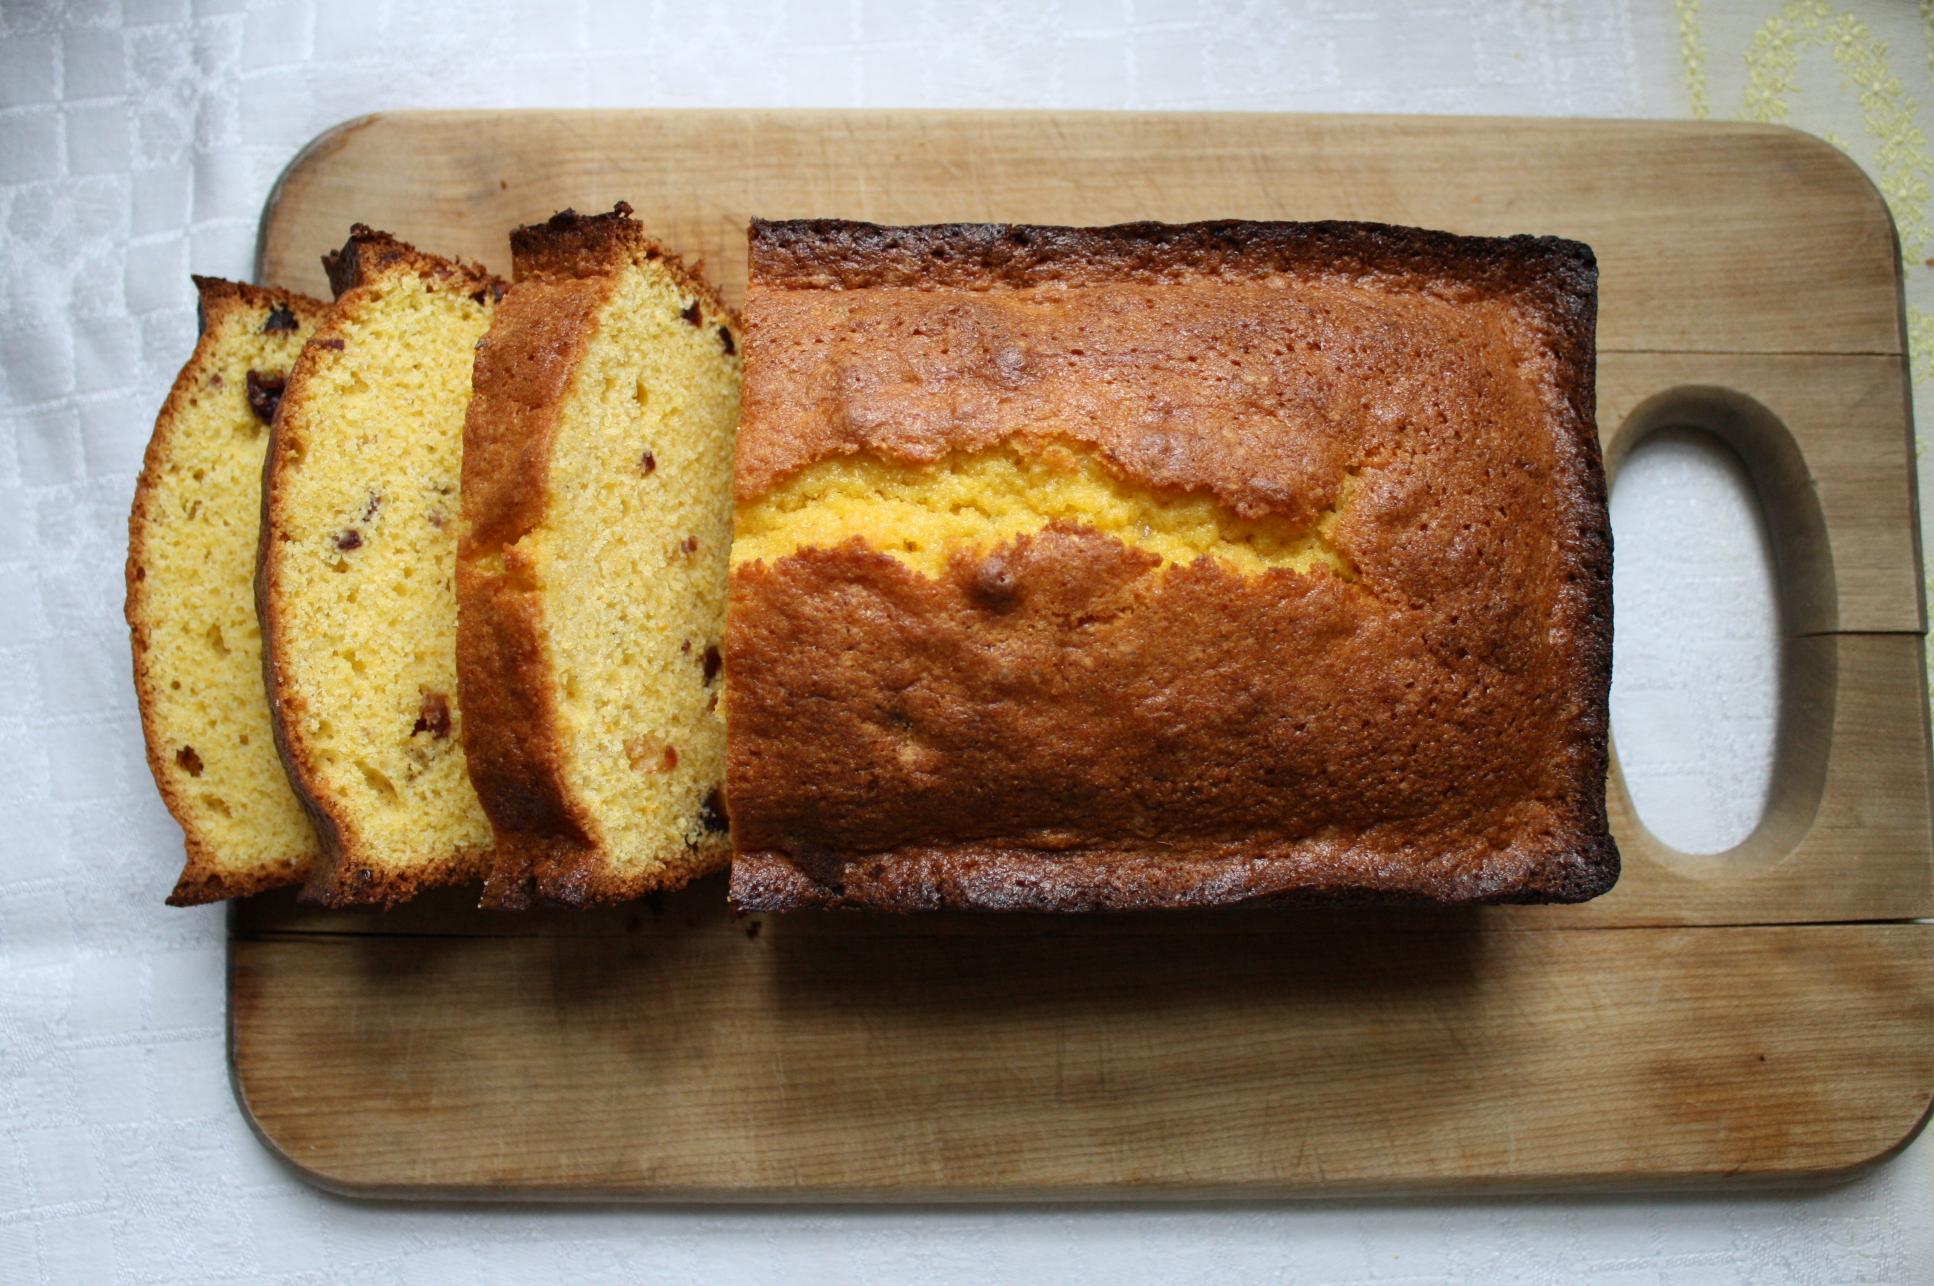 Sure, here are some creative photo captions for the Orange Cornmeal Pound Cake recipe: